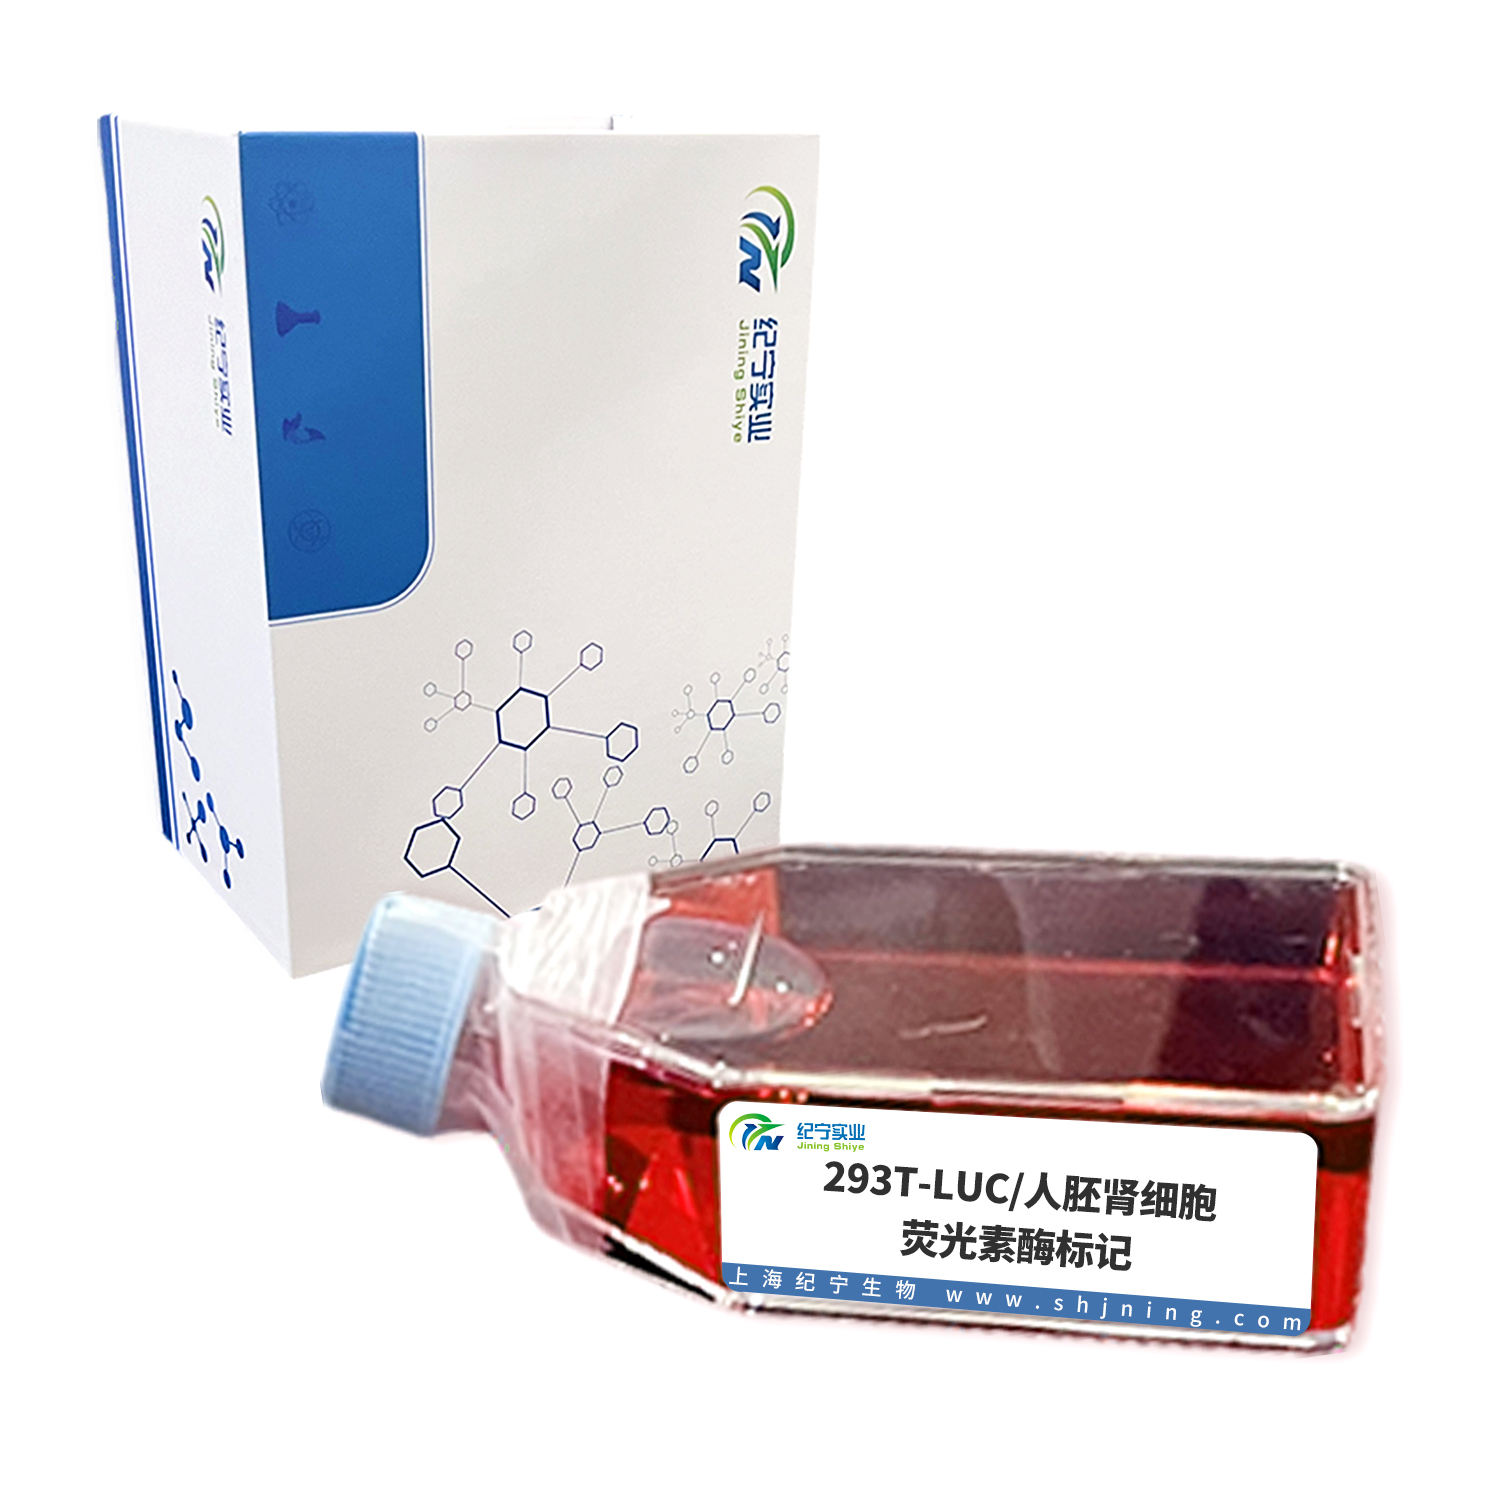 293T-LUC/人胚肾细胞-荧光素酶标记